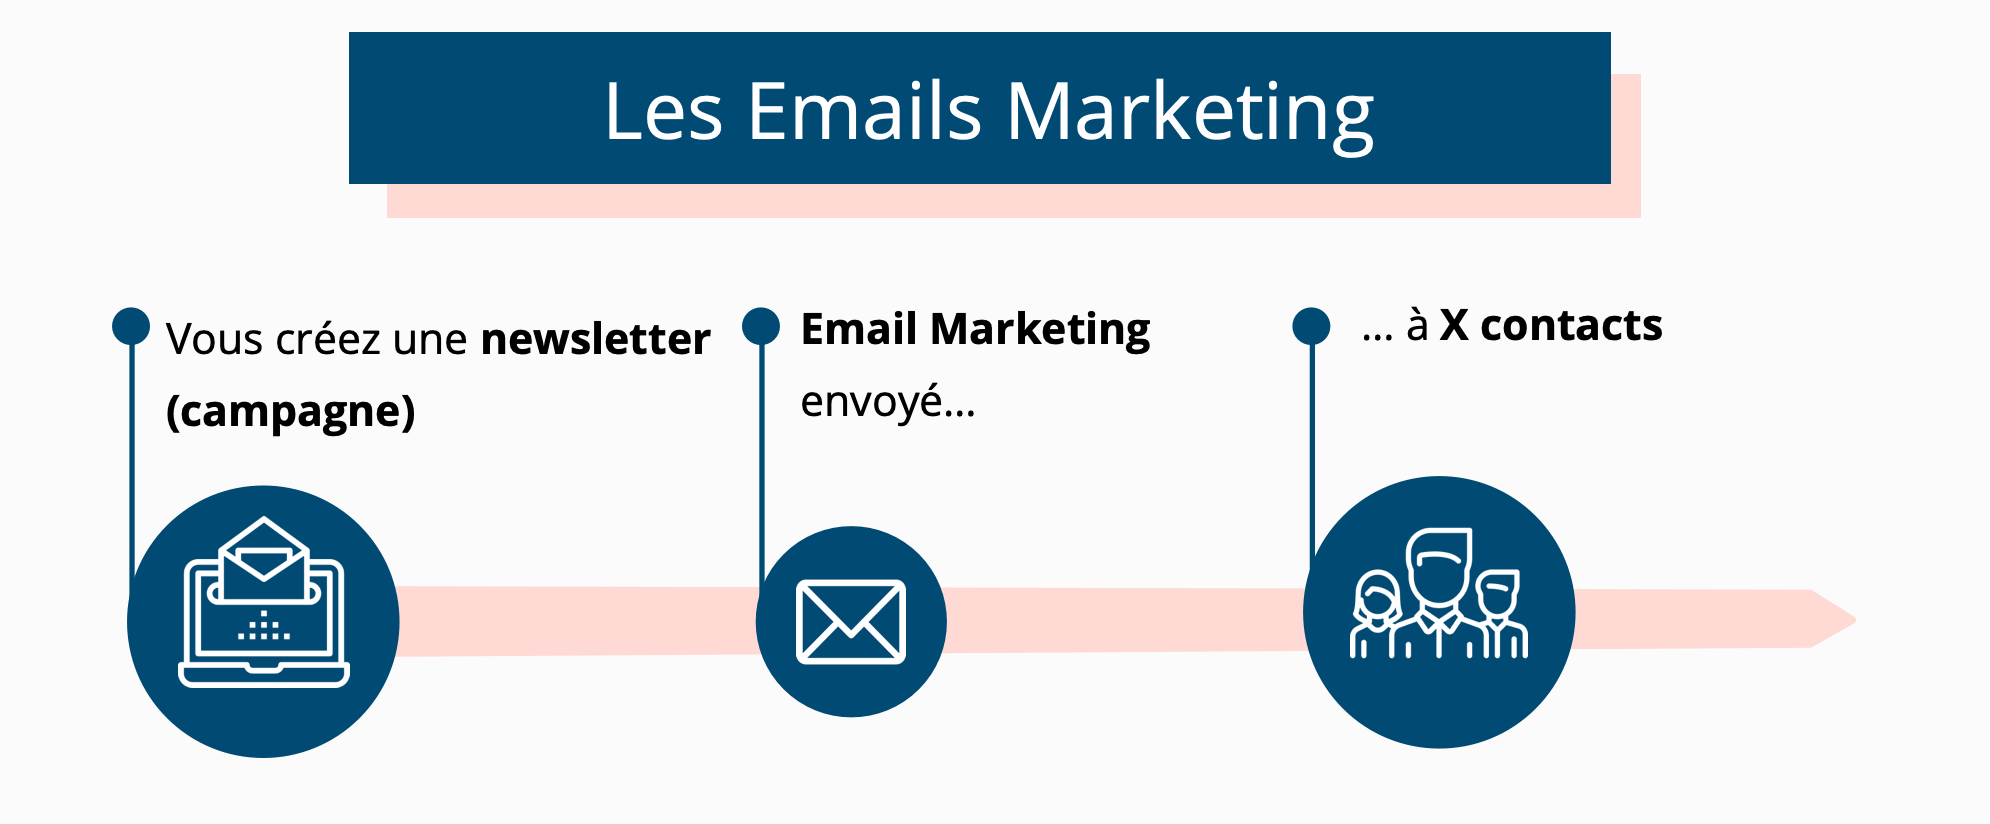 Marketing_emails_explained_FR.png